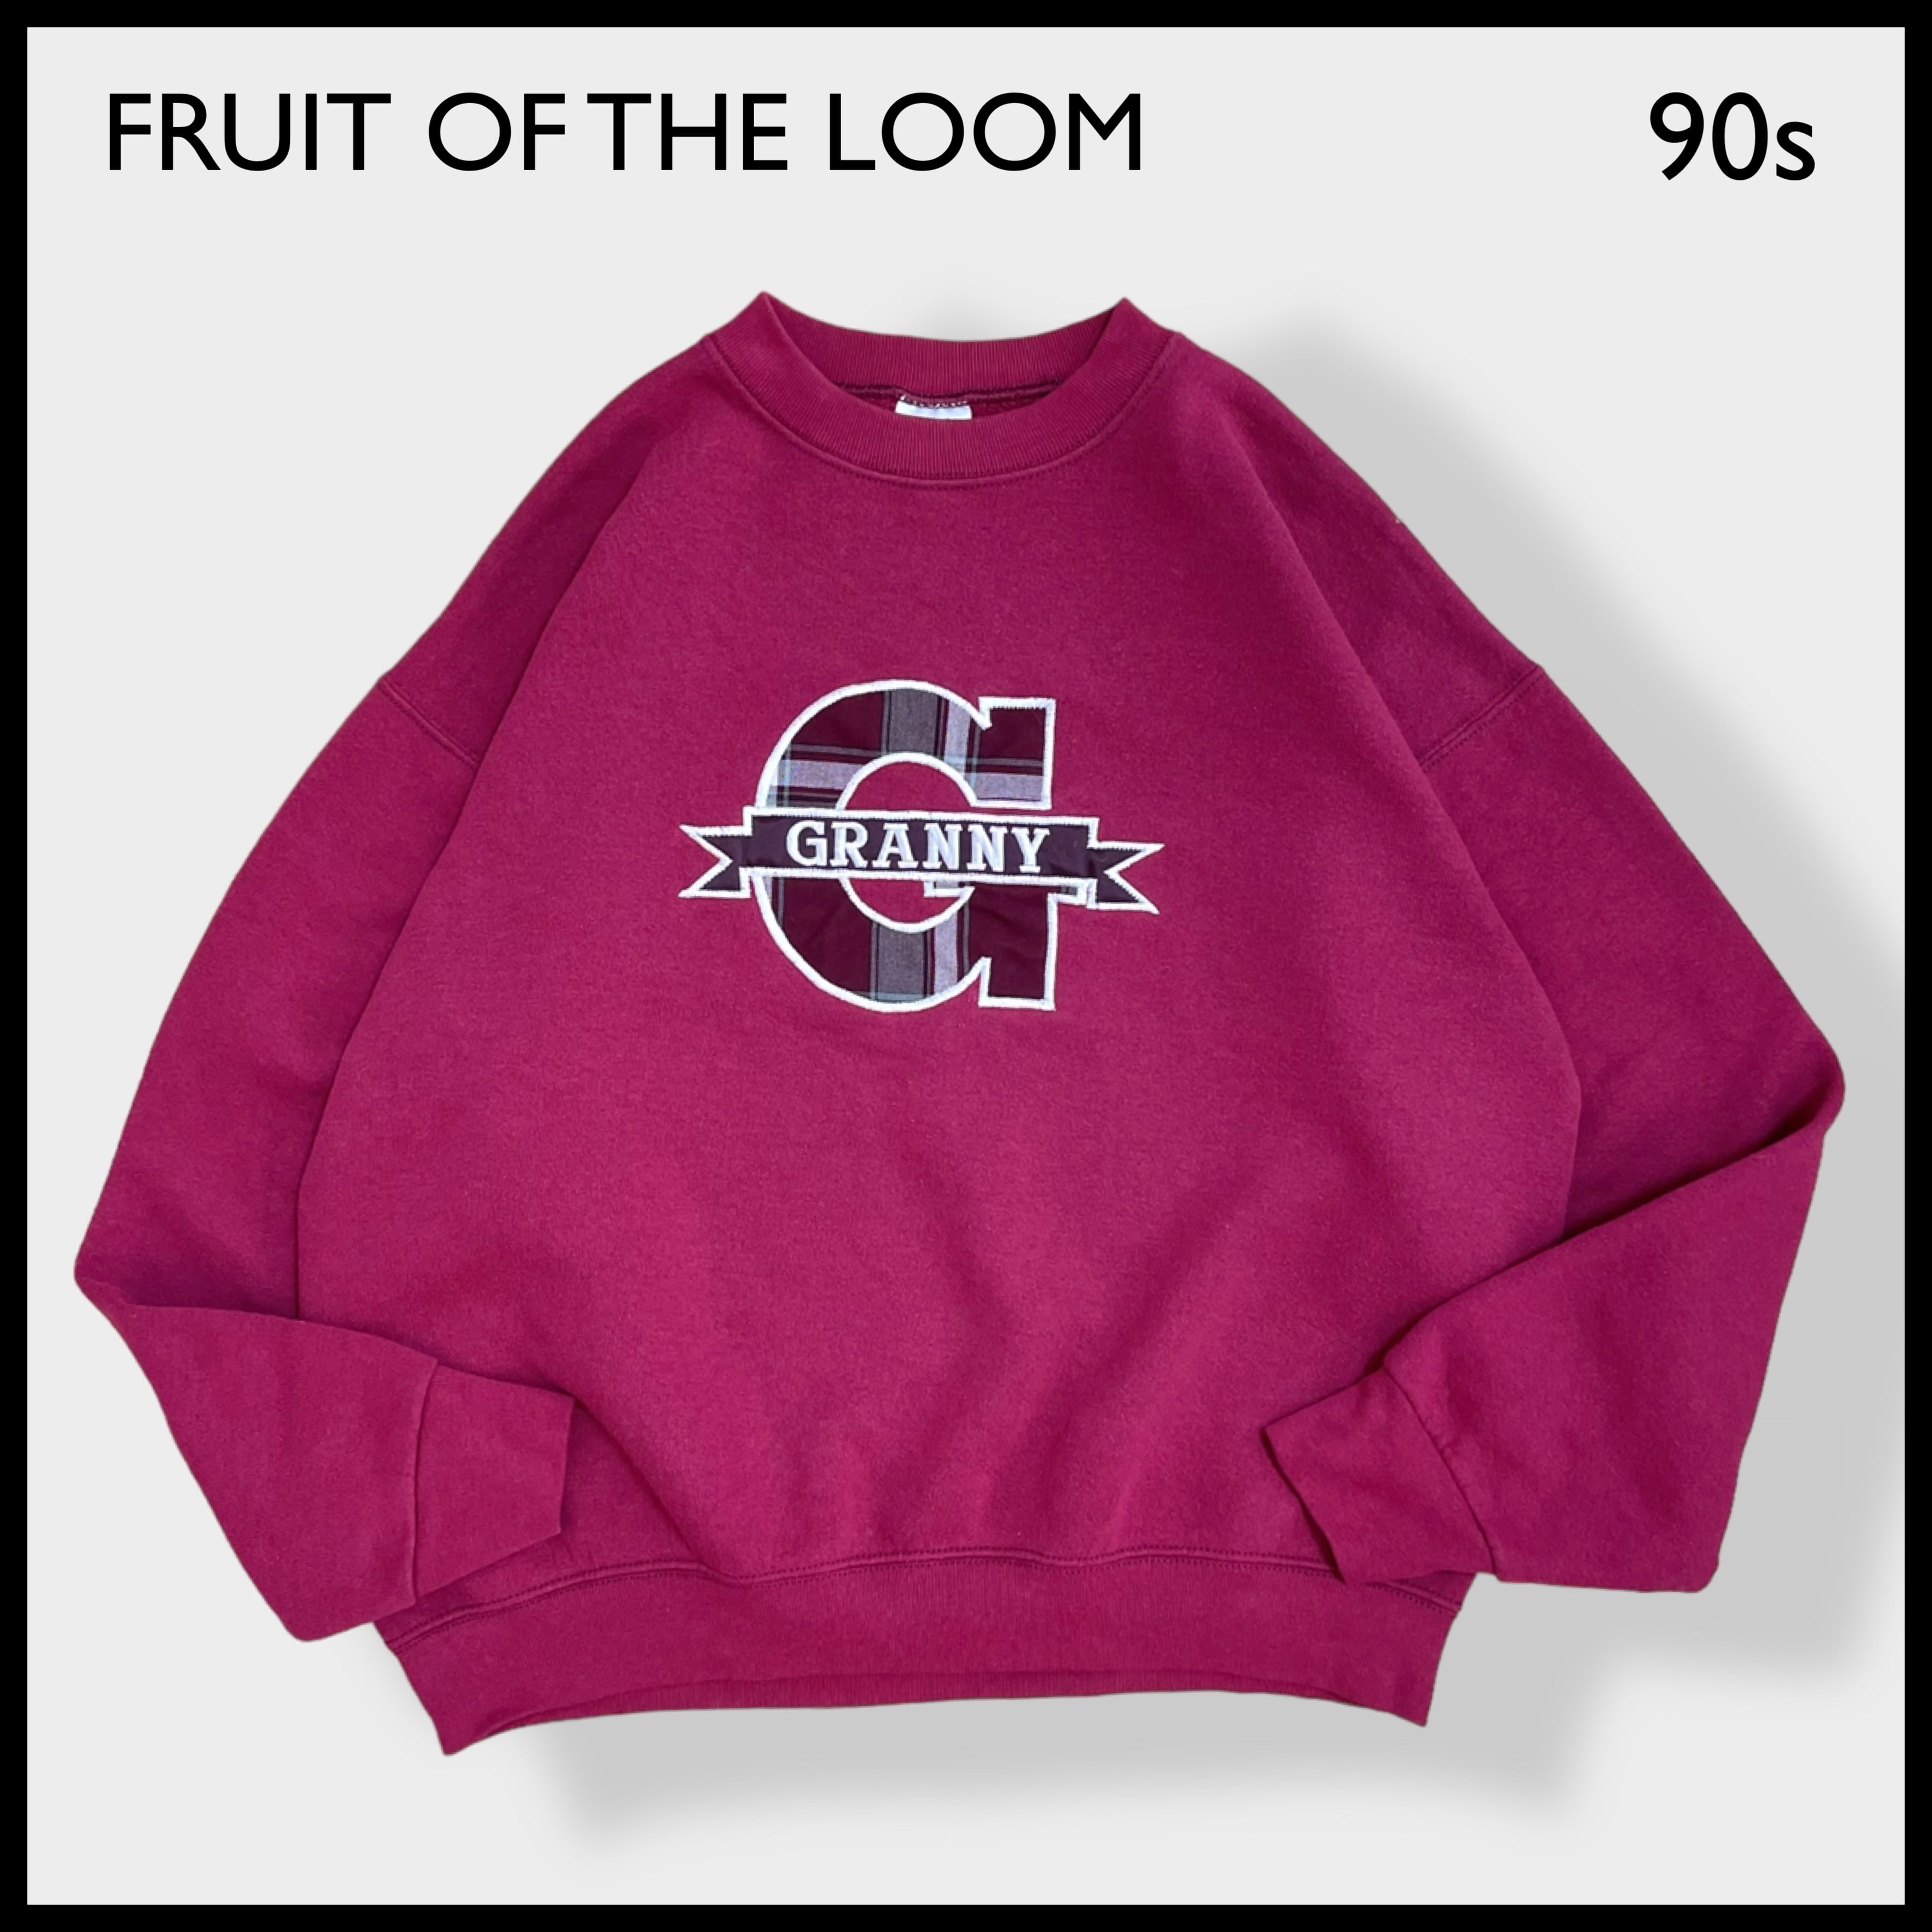 FRUIT OF THE LOOM】90s USA製 GRANNY 刺繍ロゴ スウェットシャツ